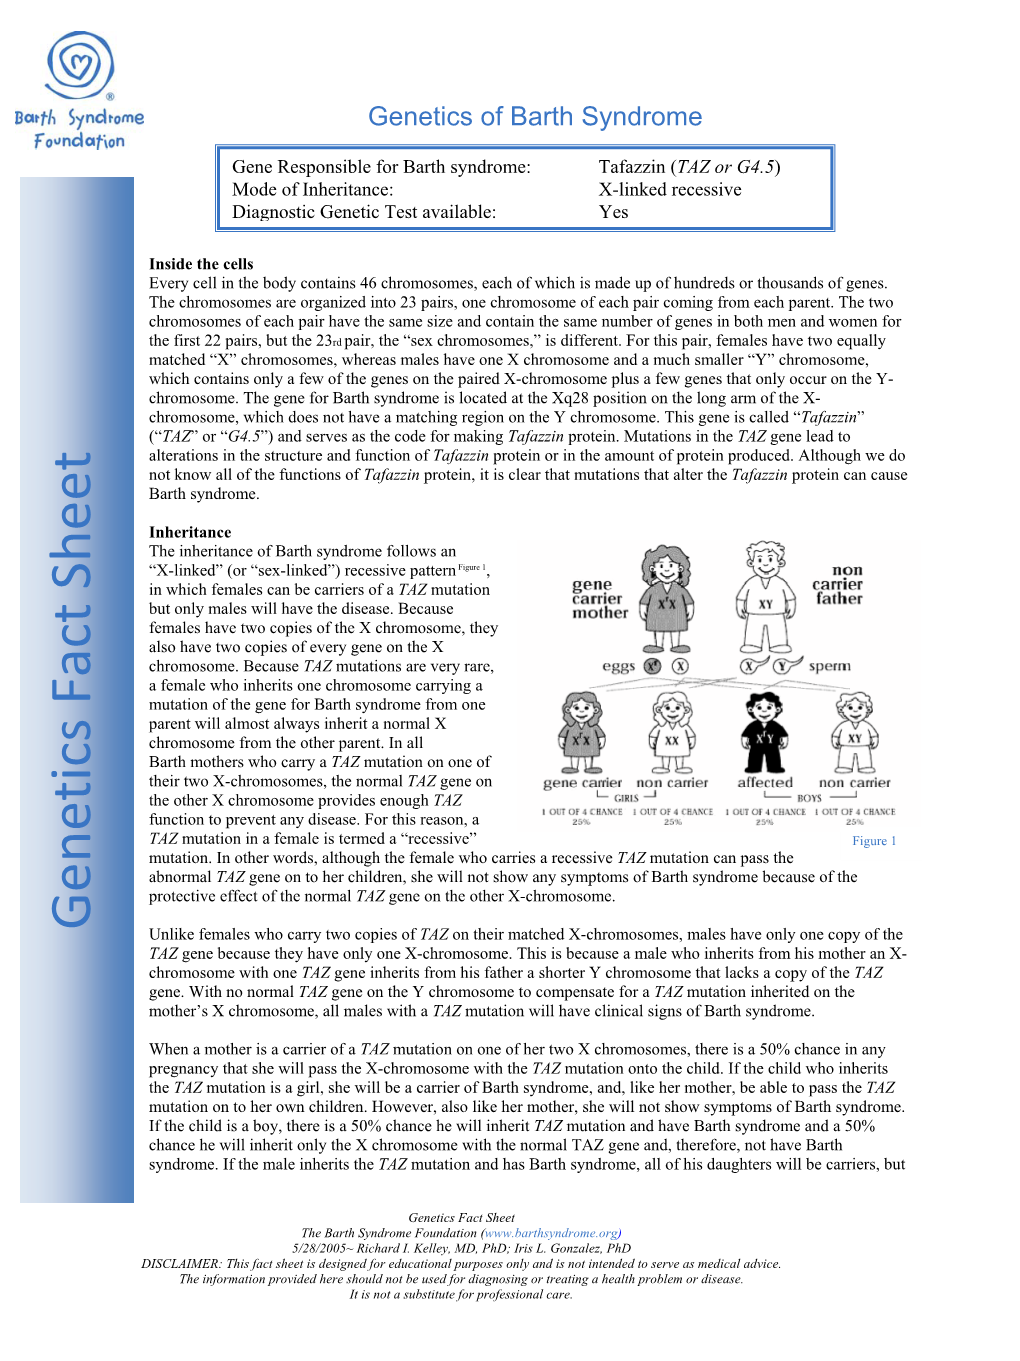 Genetics Fact Sheet the Barth Syndrome Foundation ( 5/28/2005~ Richard I